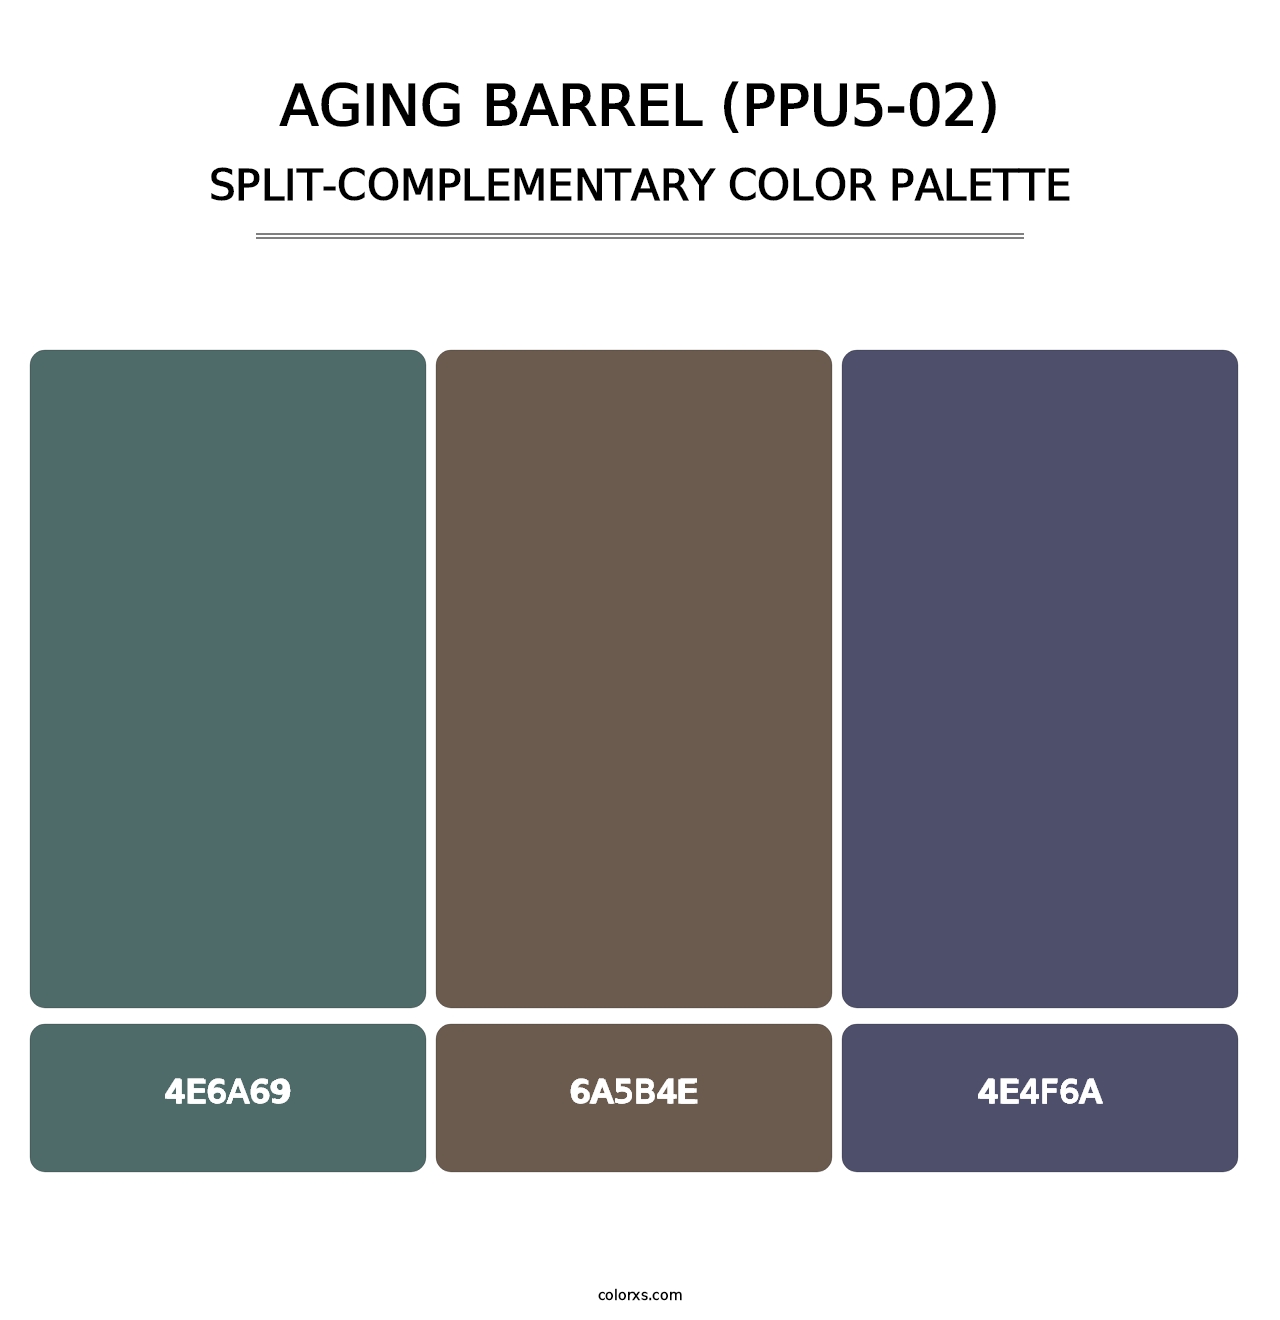 Aging Barrel (PPU5-02) - Split-Complementary Color Palette